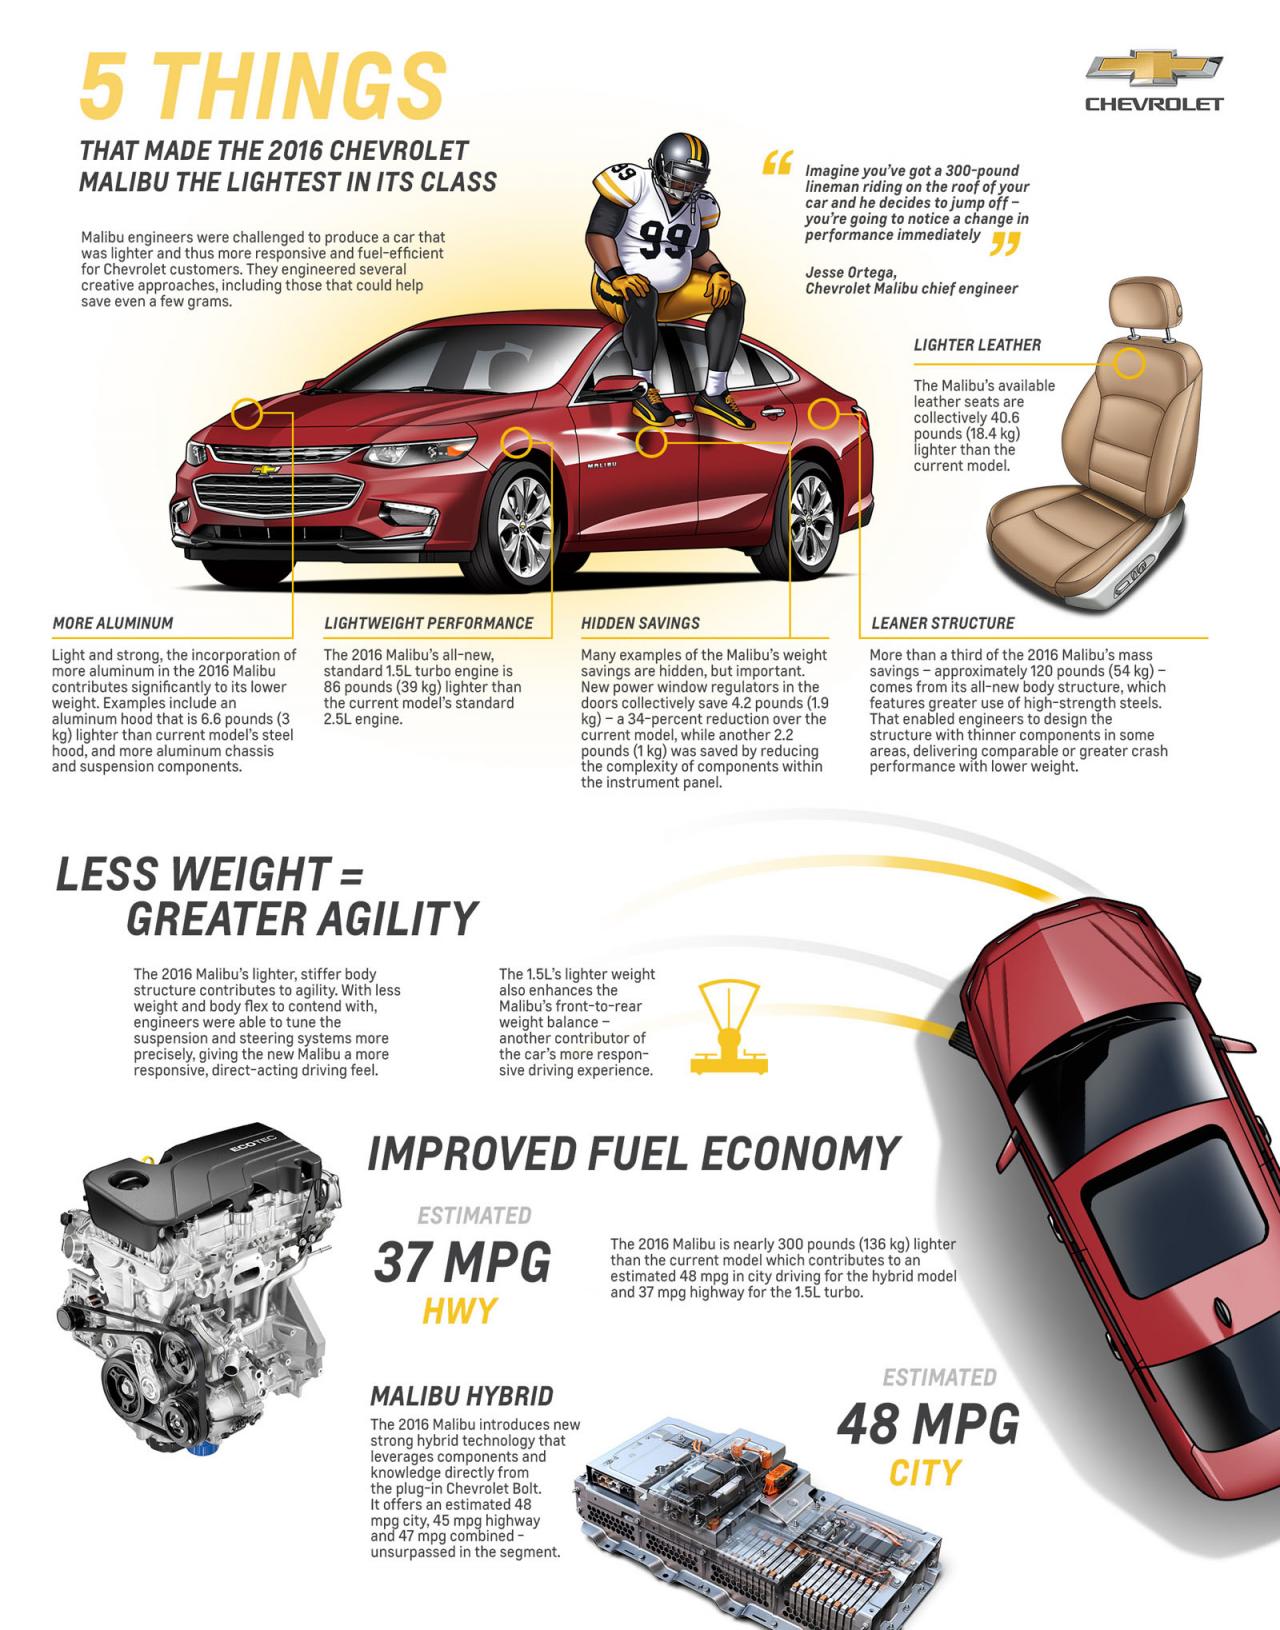 2016 Chevrolet Malibu weight savings infographic